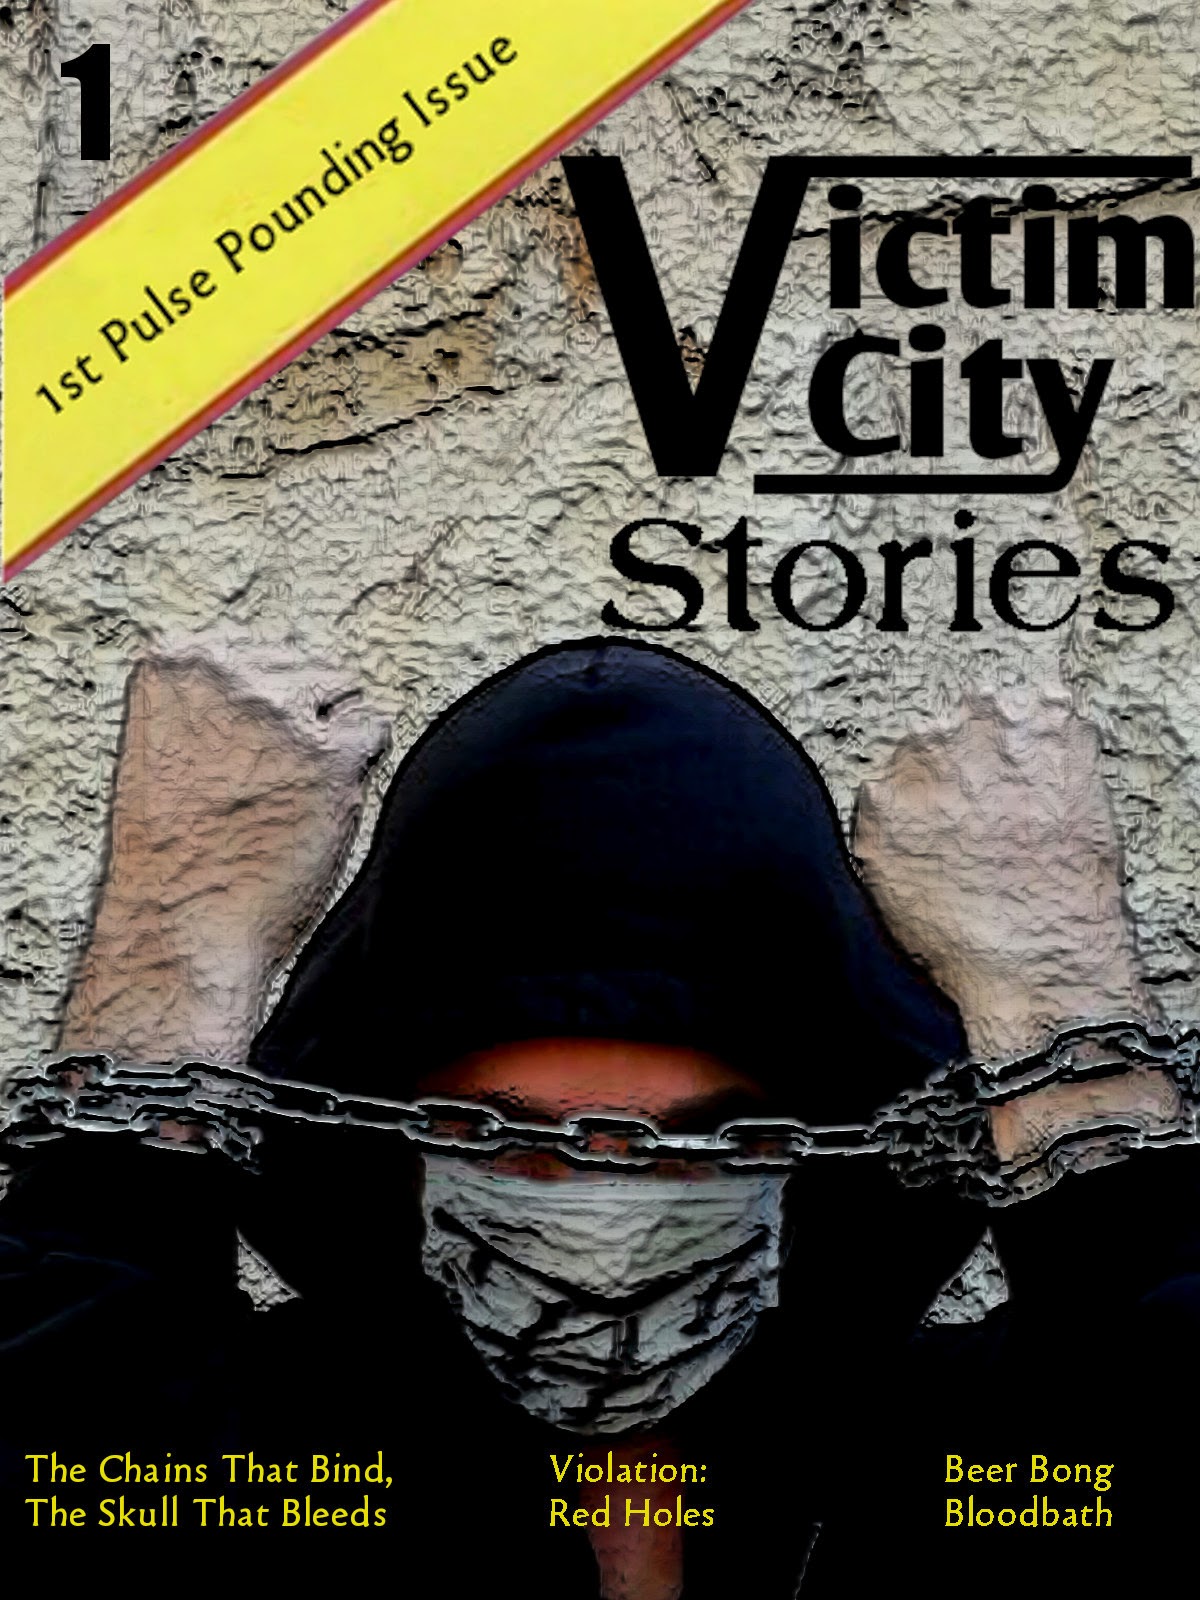 http://www.amazon.com/Victim-City-Stories-Issue-1-ebook/dp/B00HQDC0EI